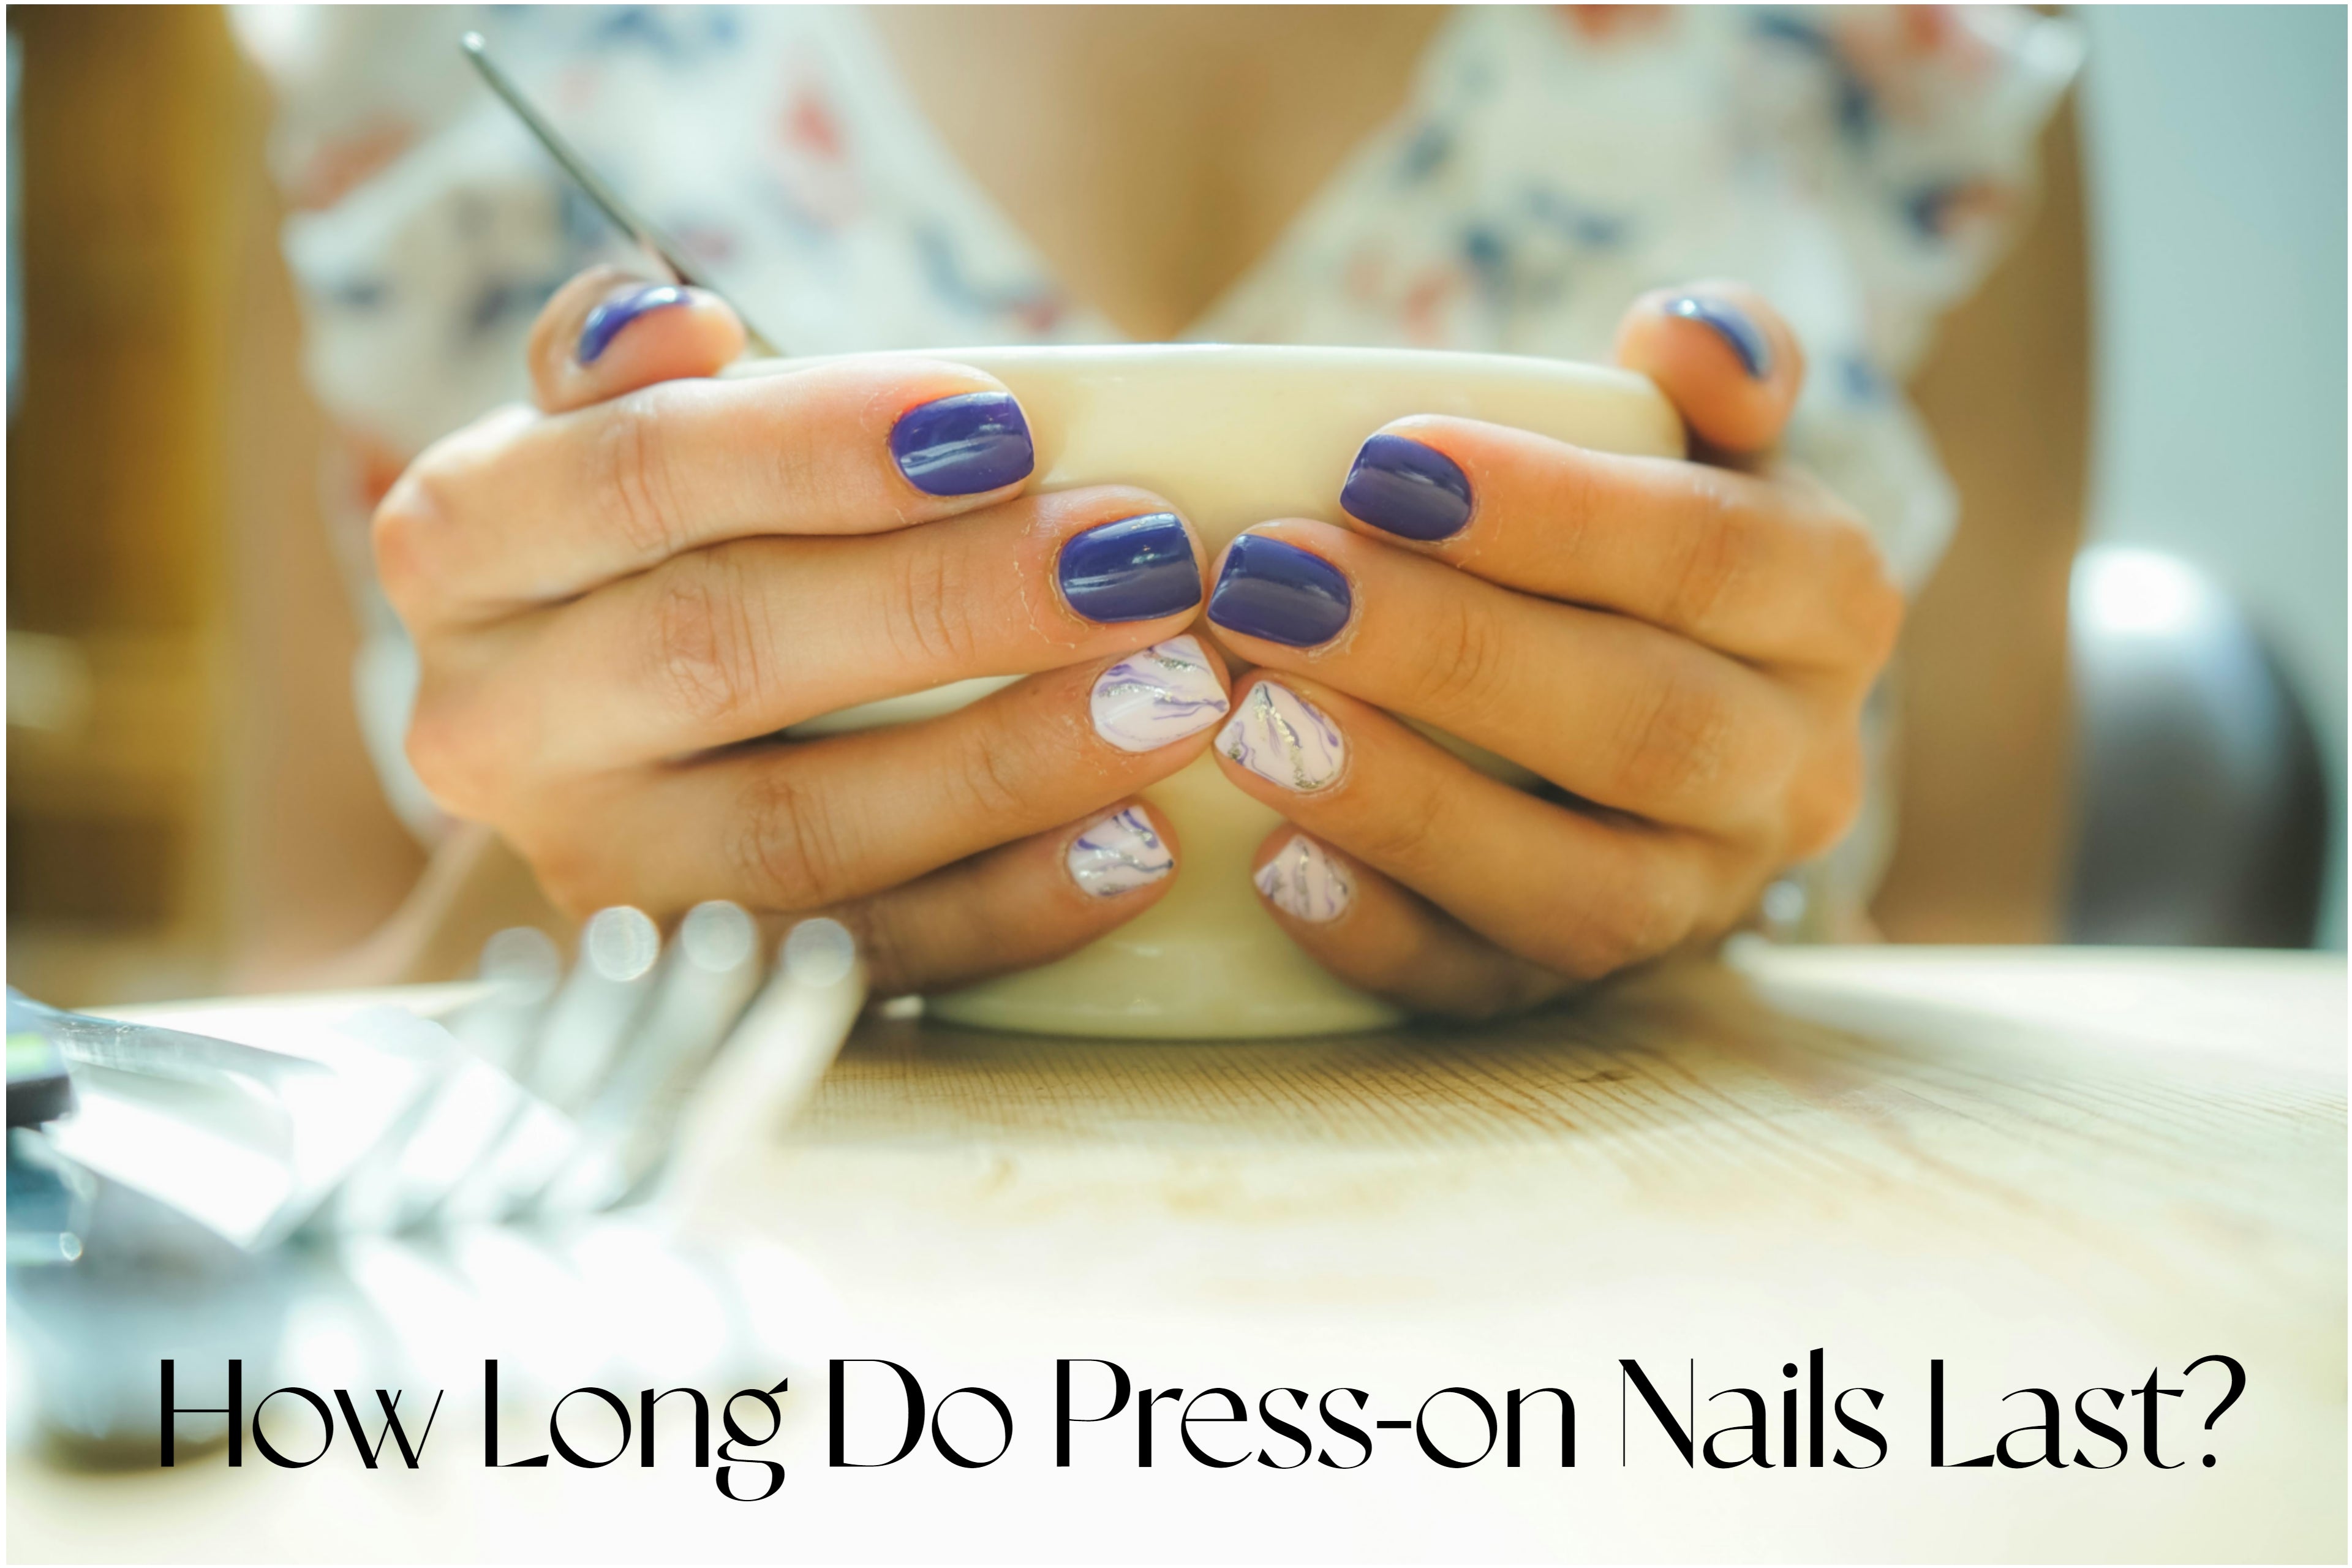 How Long Do Press-on Nails Last?